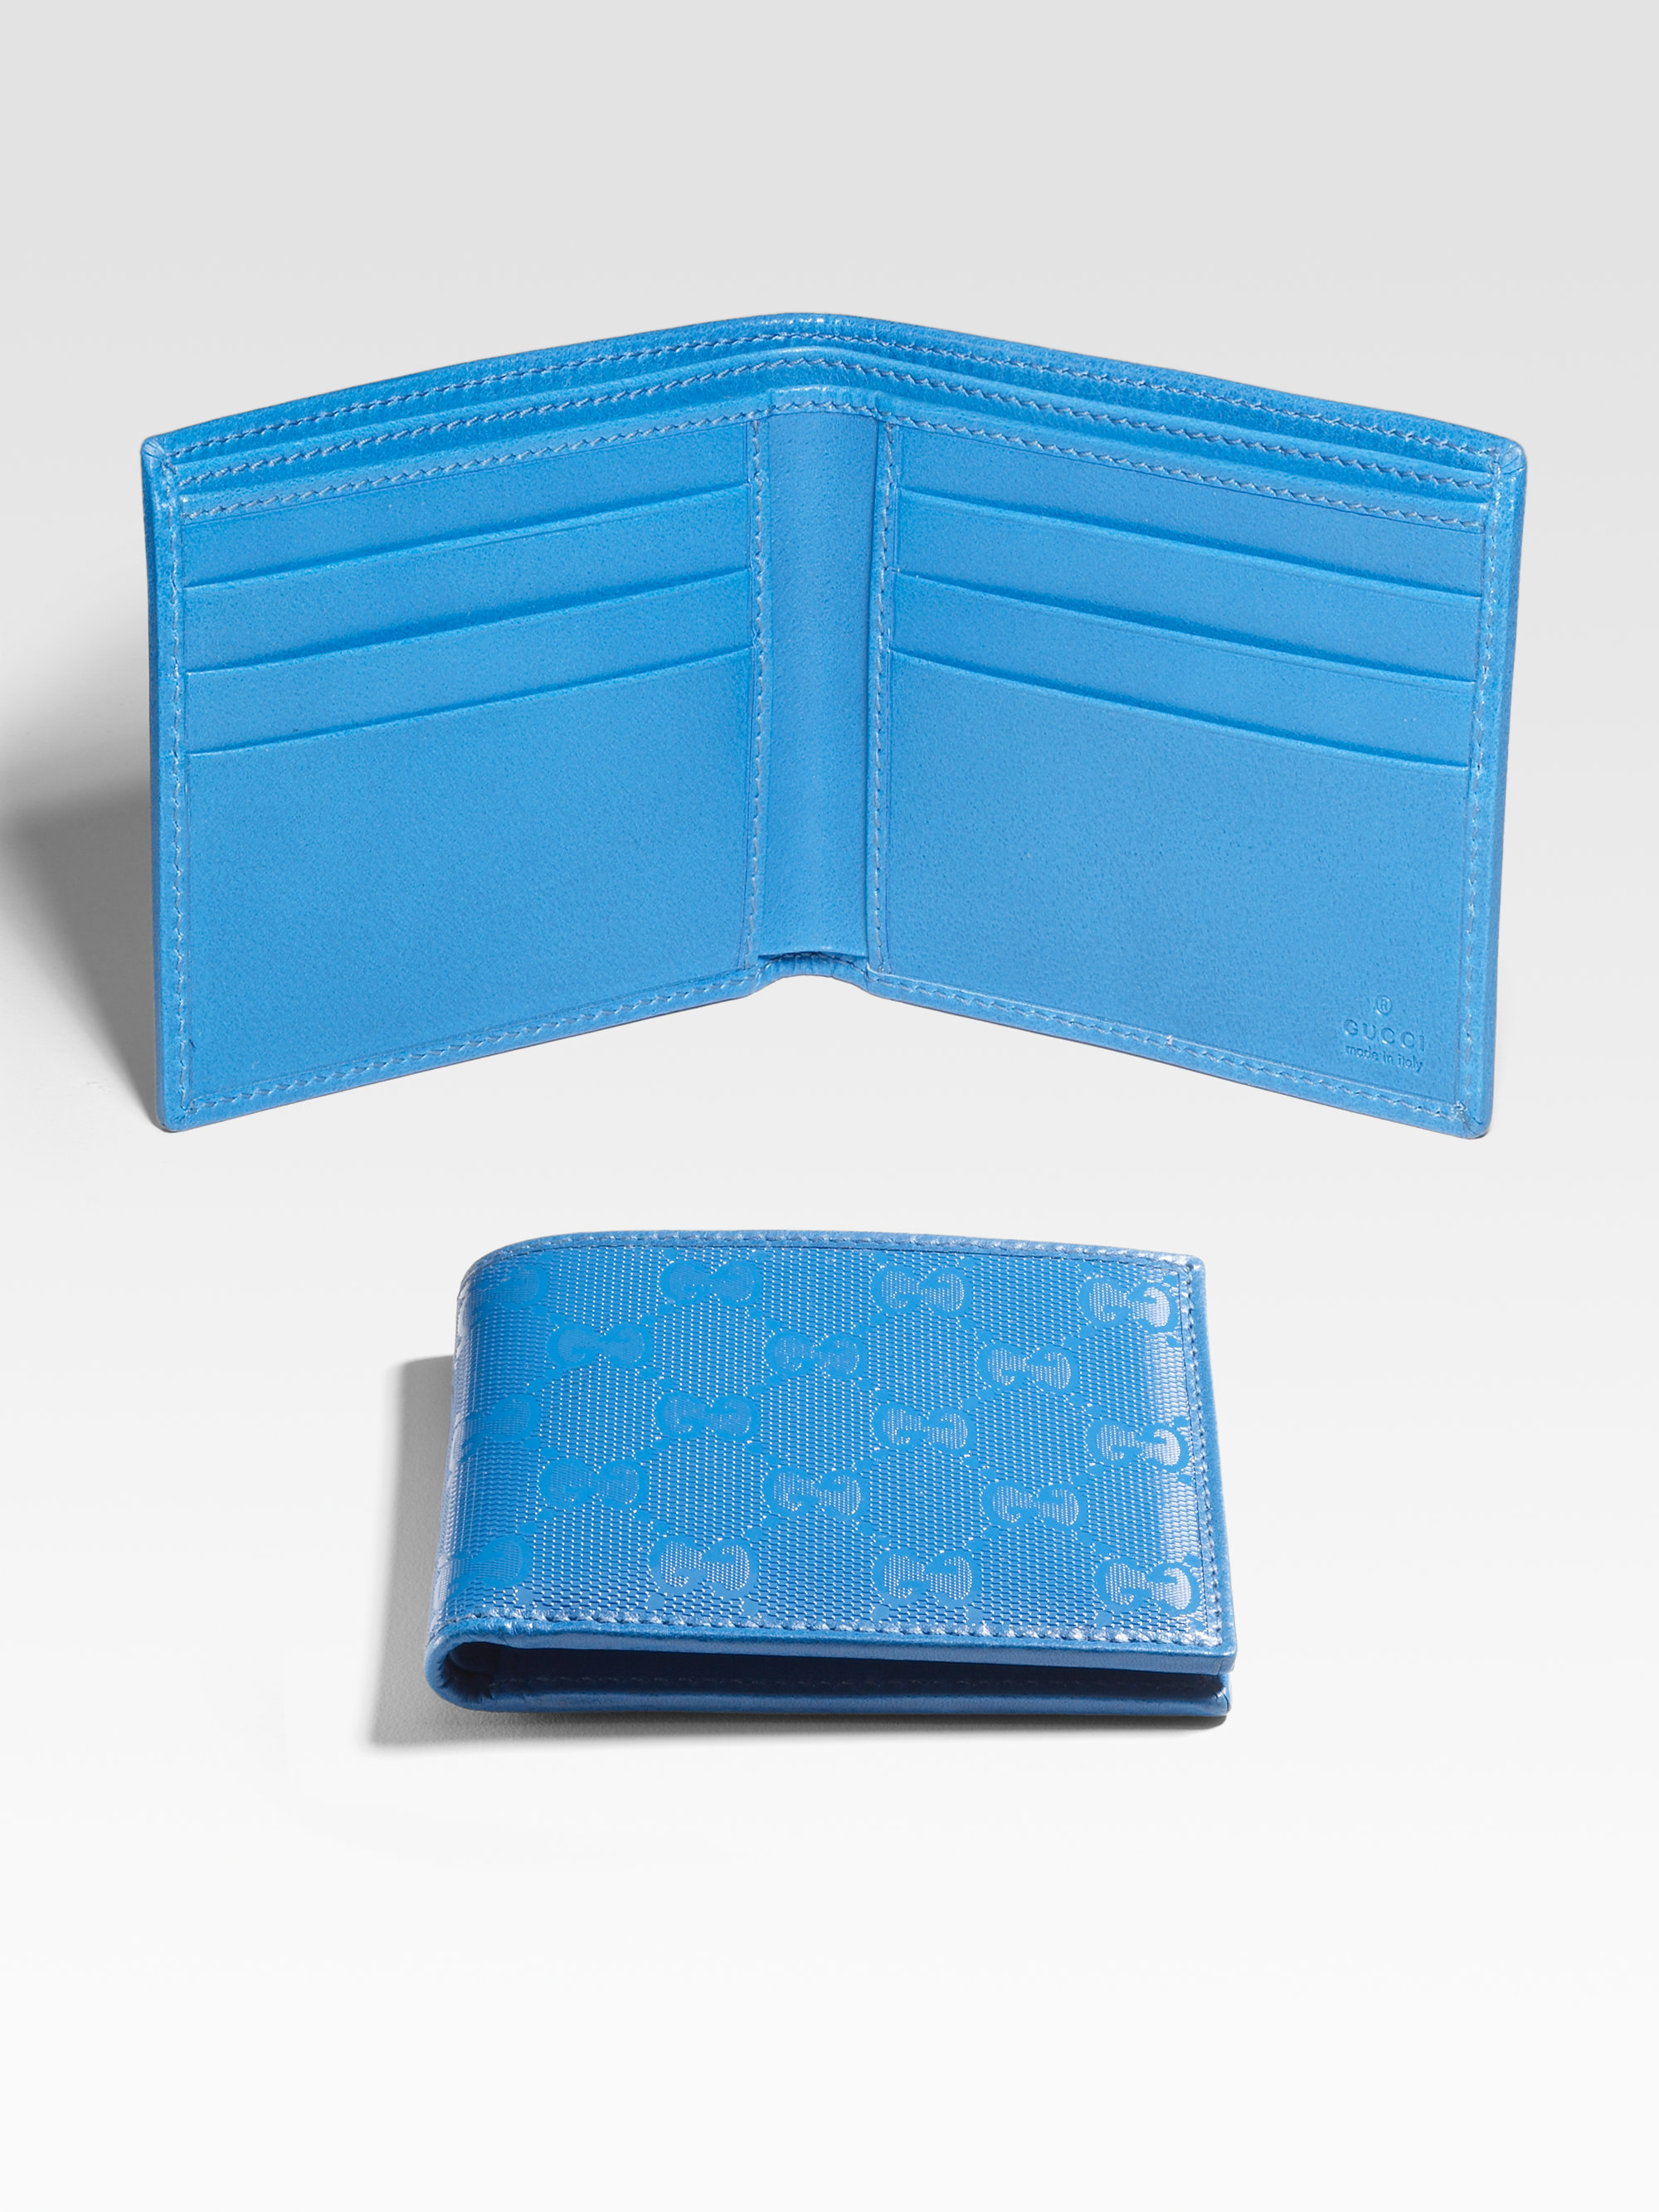 Gucci Bifold Wallet in Blue for Men - Lyst